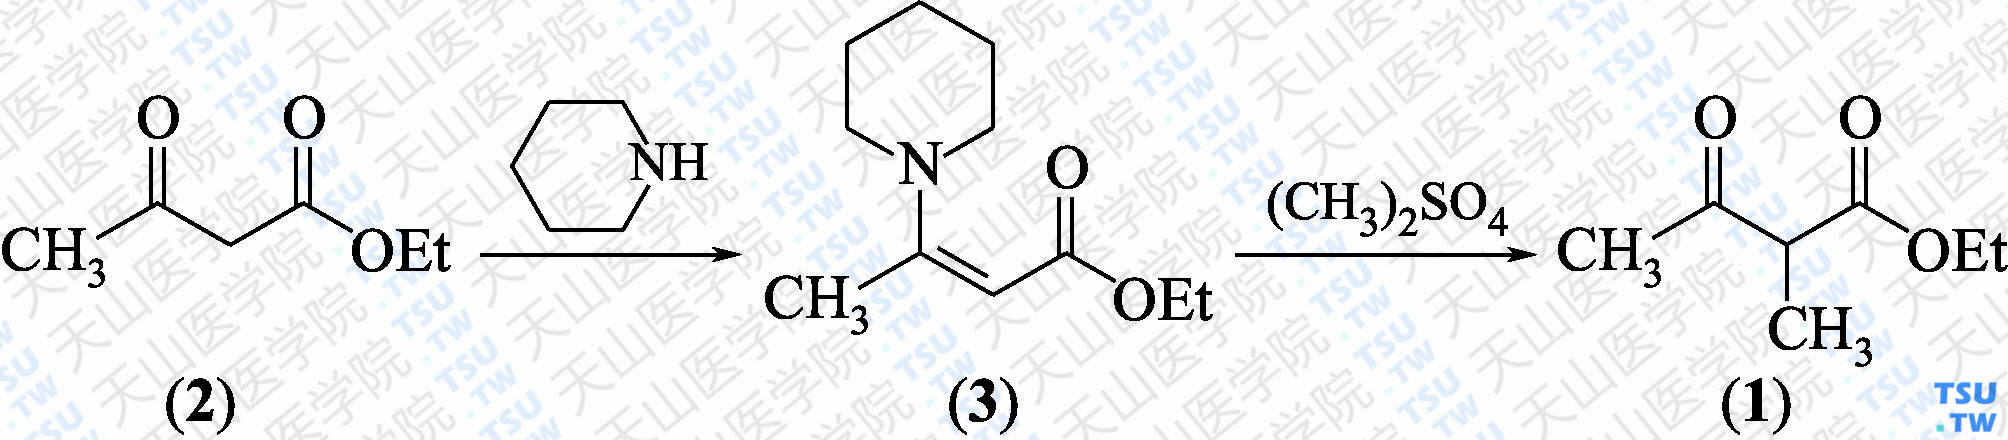 2-甲基乙酰乙酸乙酯（分子式：C<sub>7</sub>H<sub>12</sub>O<sub>3</sub>）的合成方法路线及其结构式